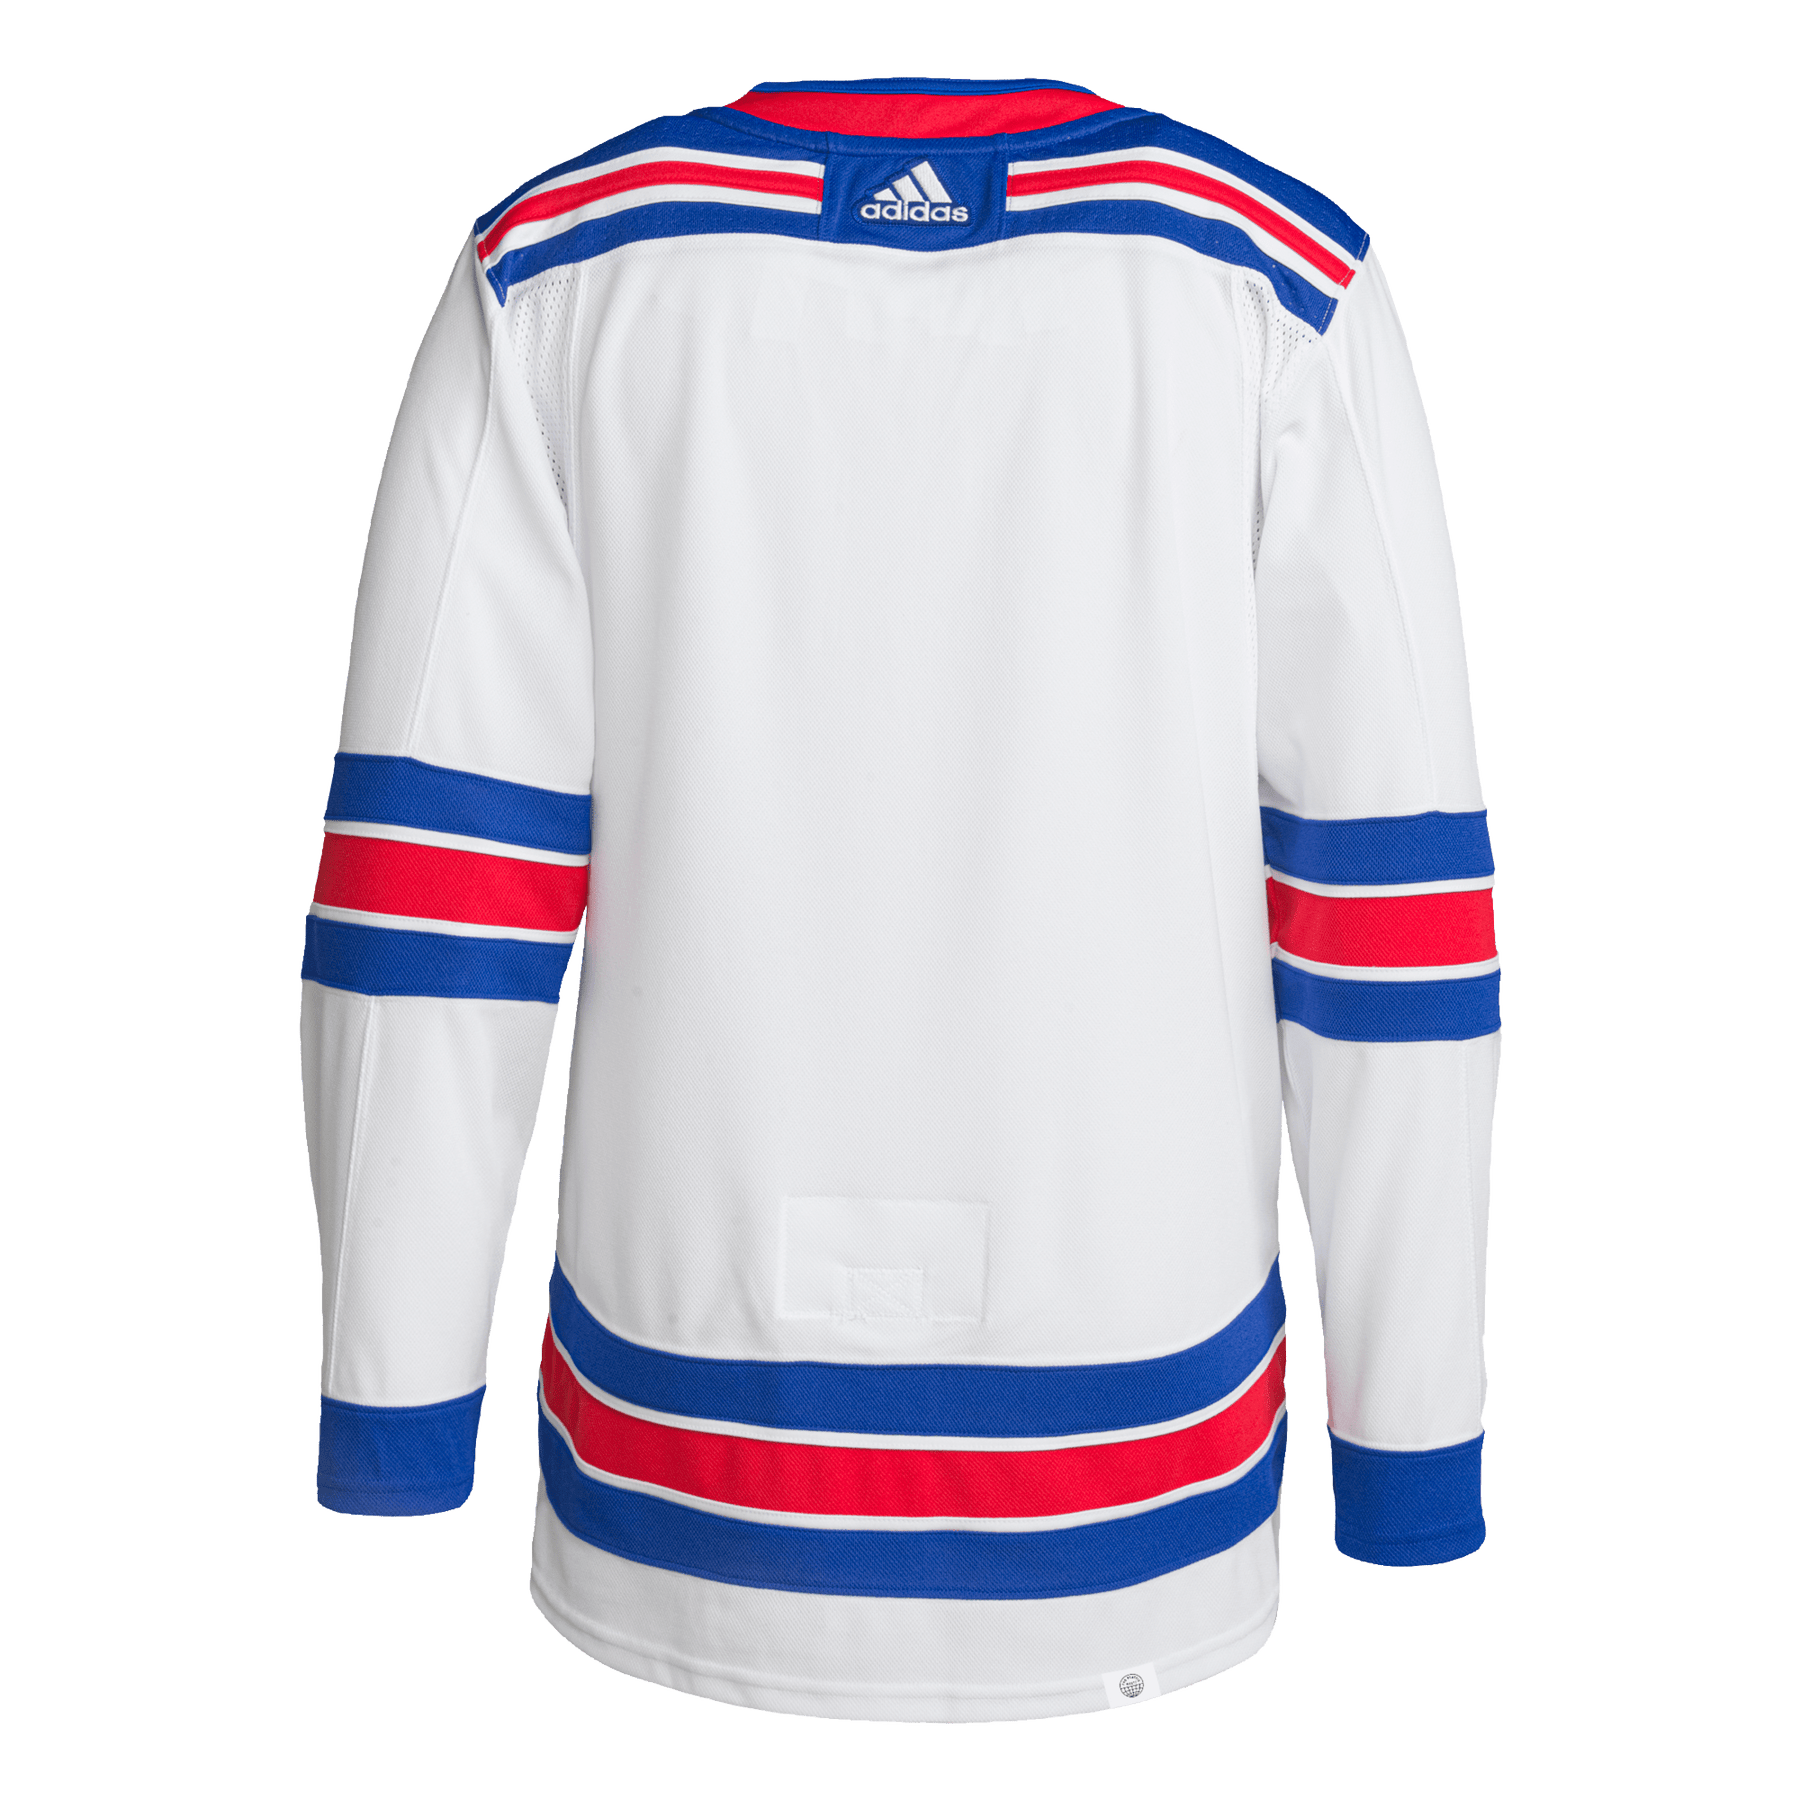 Prime Green jerseys on Adidas Site : r/hockeyjerseys